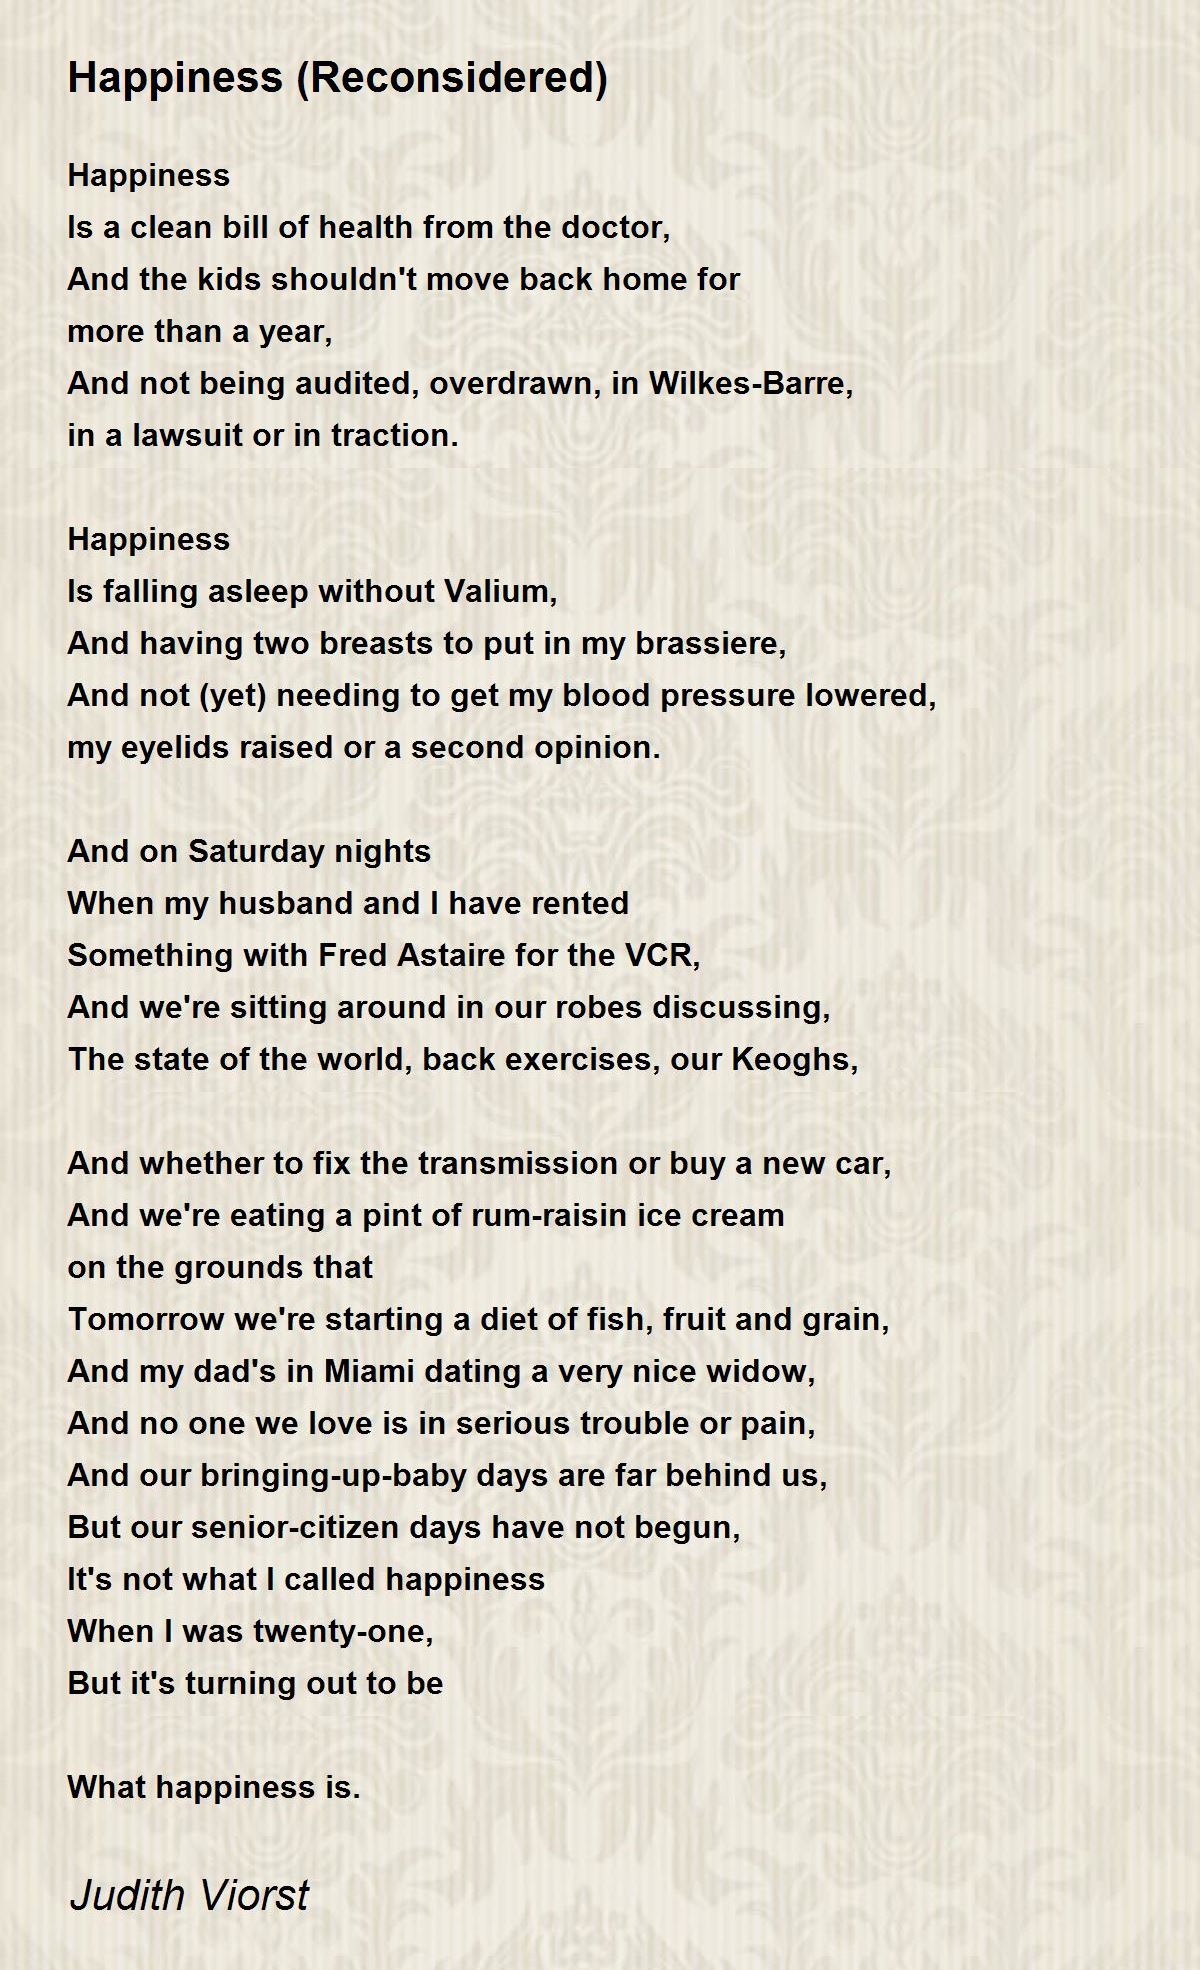 Happiness (Reconsidered) Poem by Judith Viorst - Poem Hunter